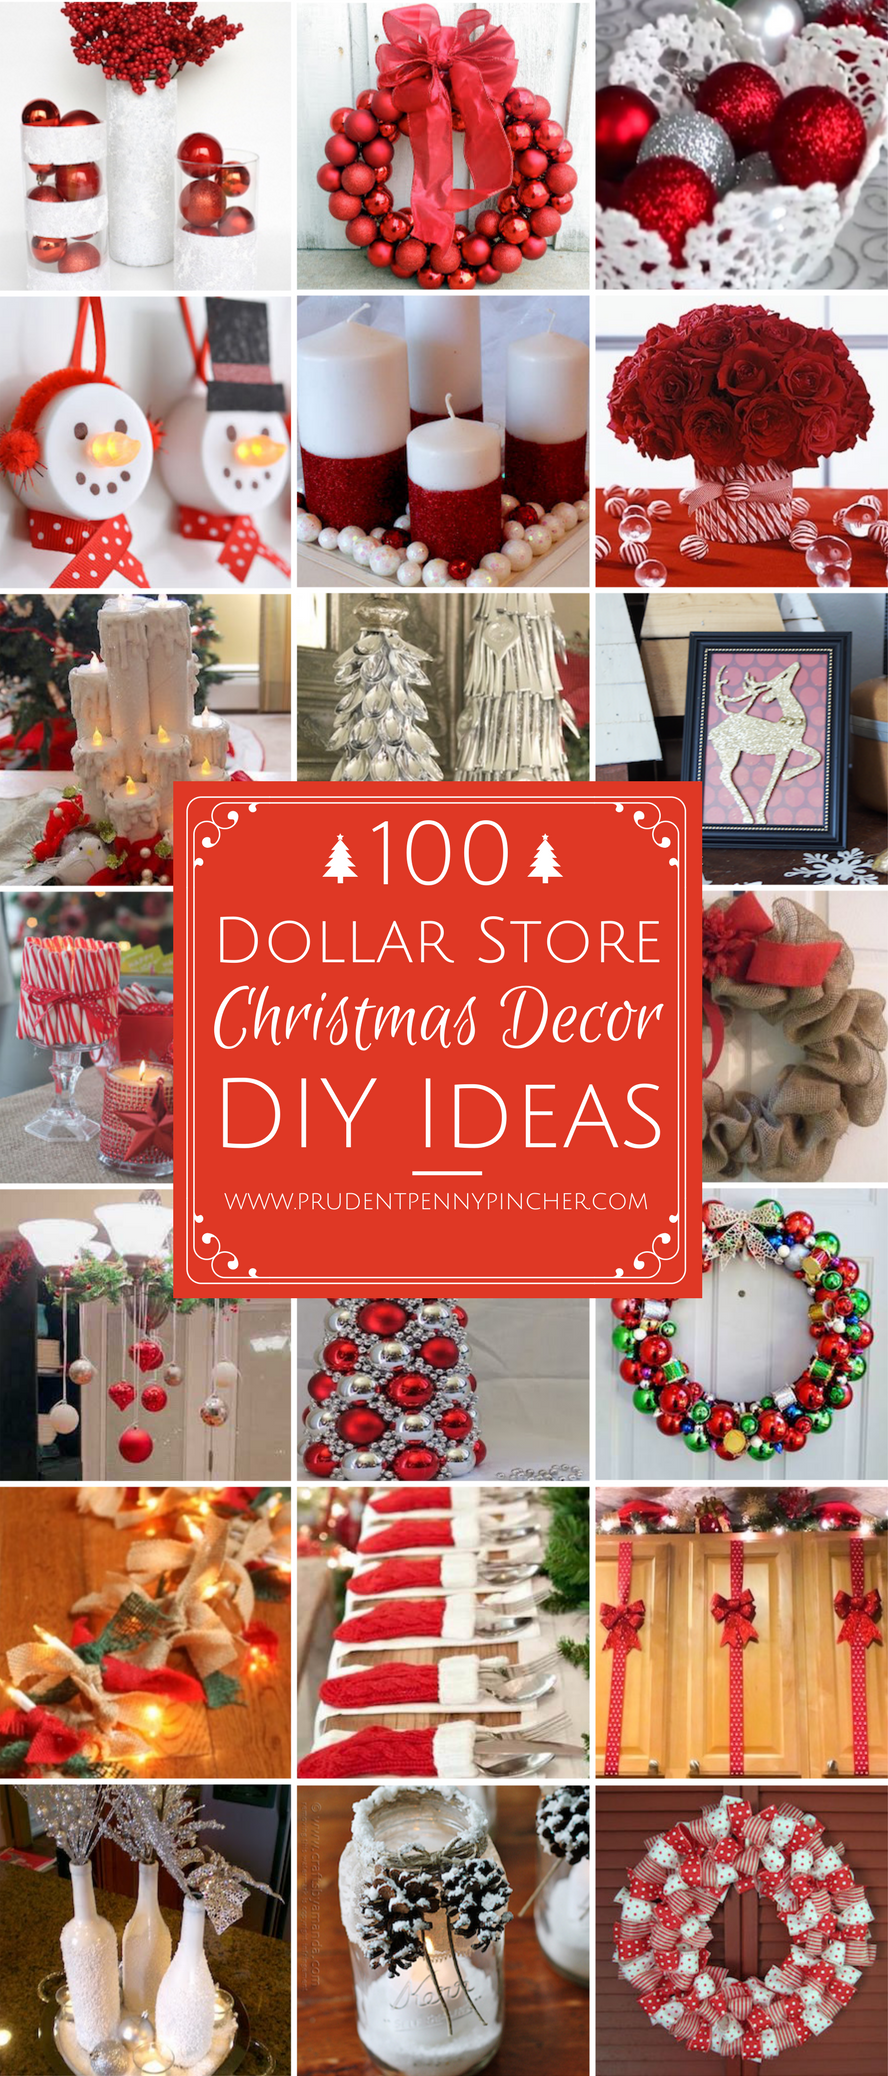 100 Dollar Store Christmas Decor DIY Ideas - Prudent Penny Pincher